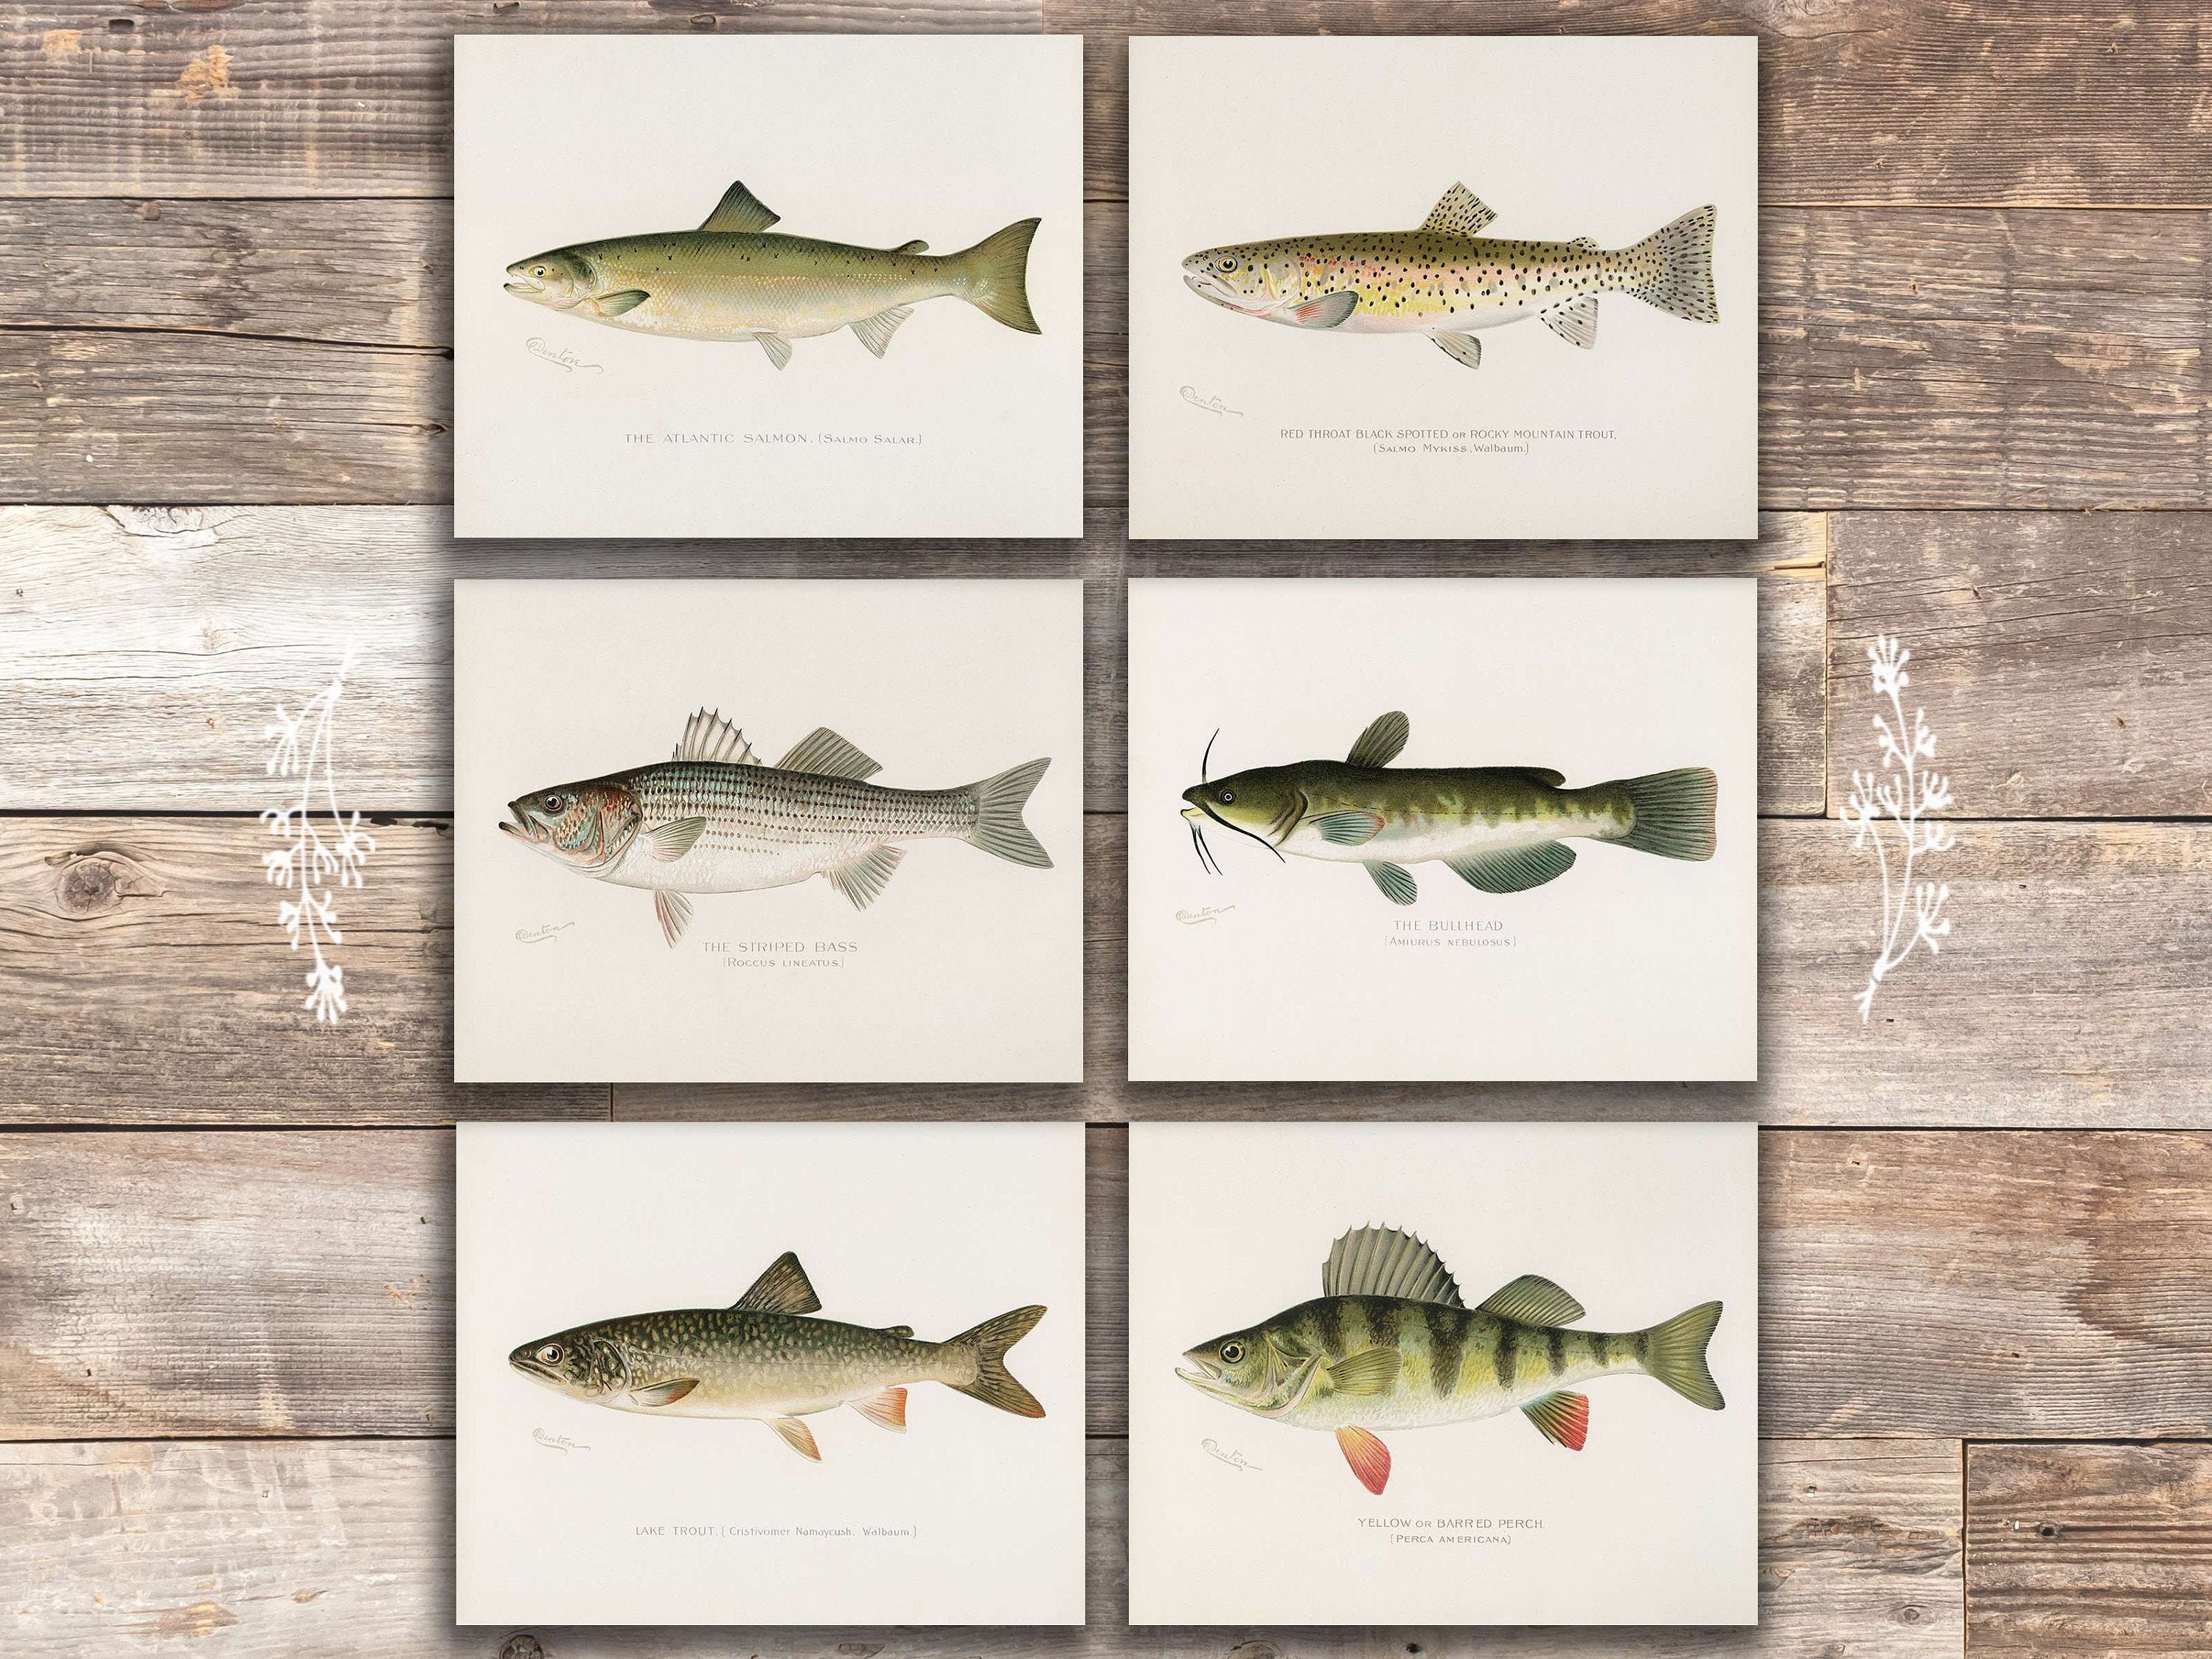 Vintage Fishing Lures Patent Art Print 8x10 Unframed Bluegill